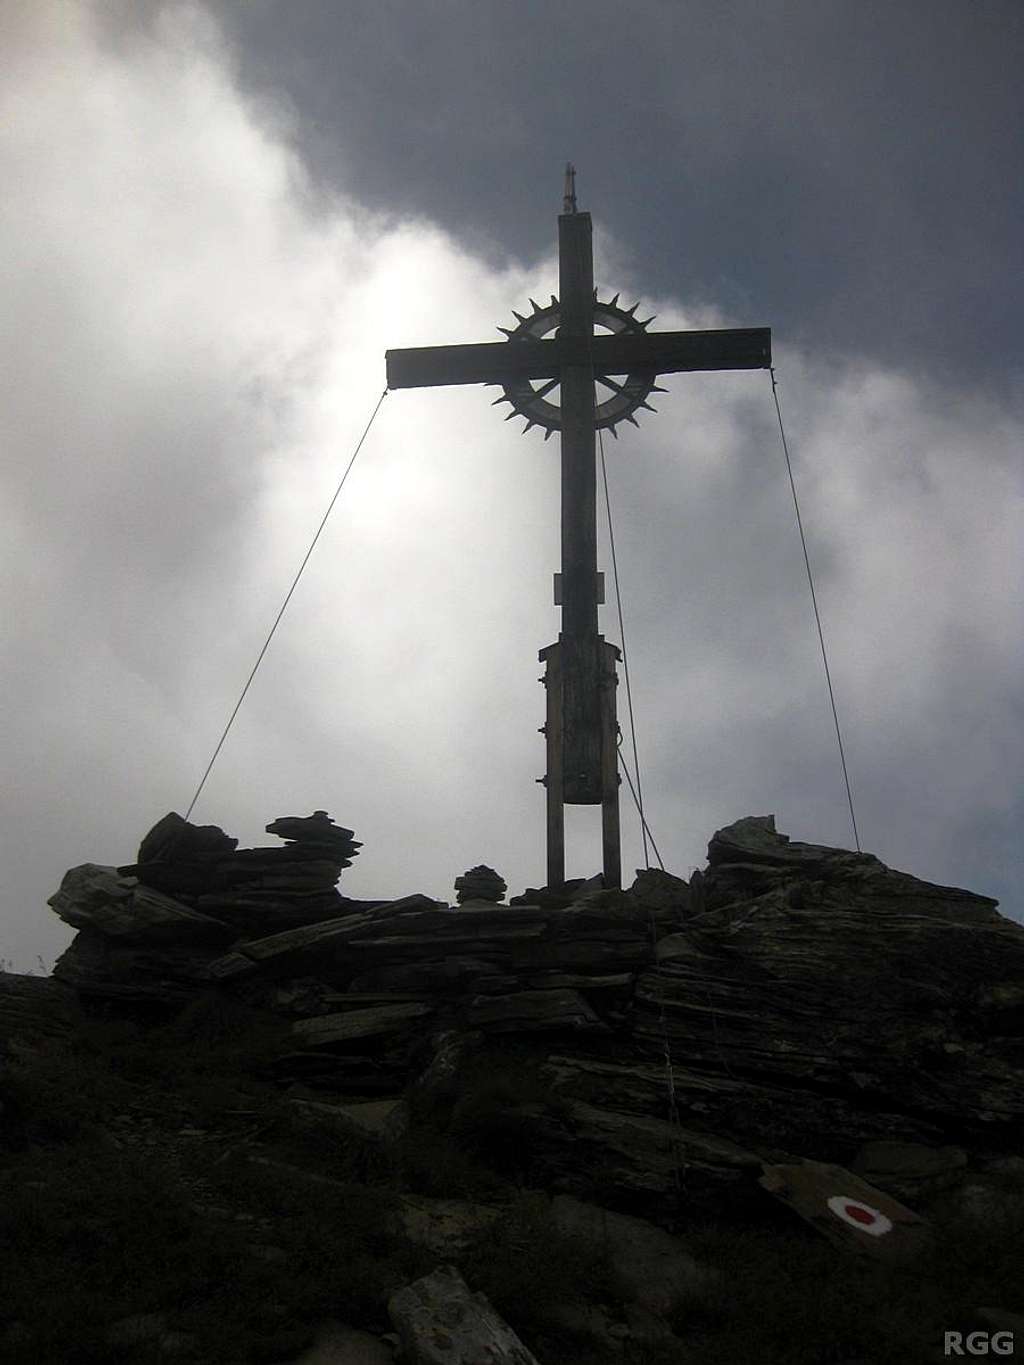 Spronser Rötelspitze summit cross